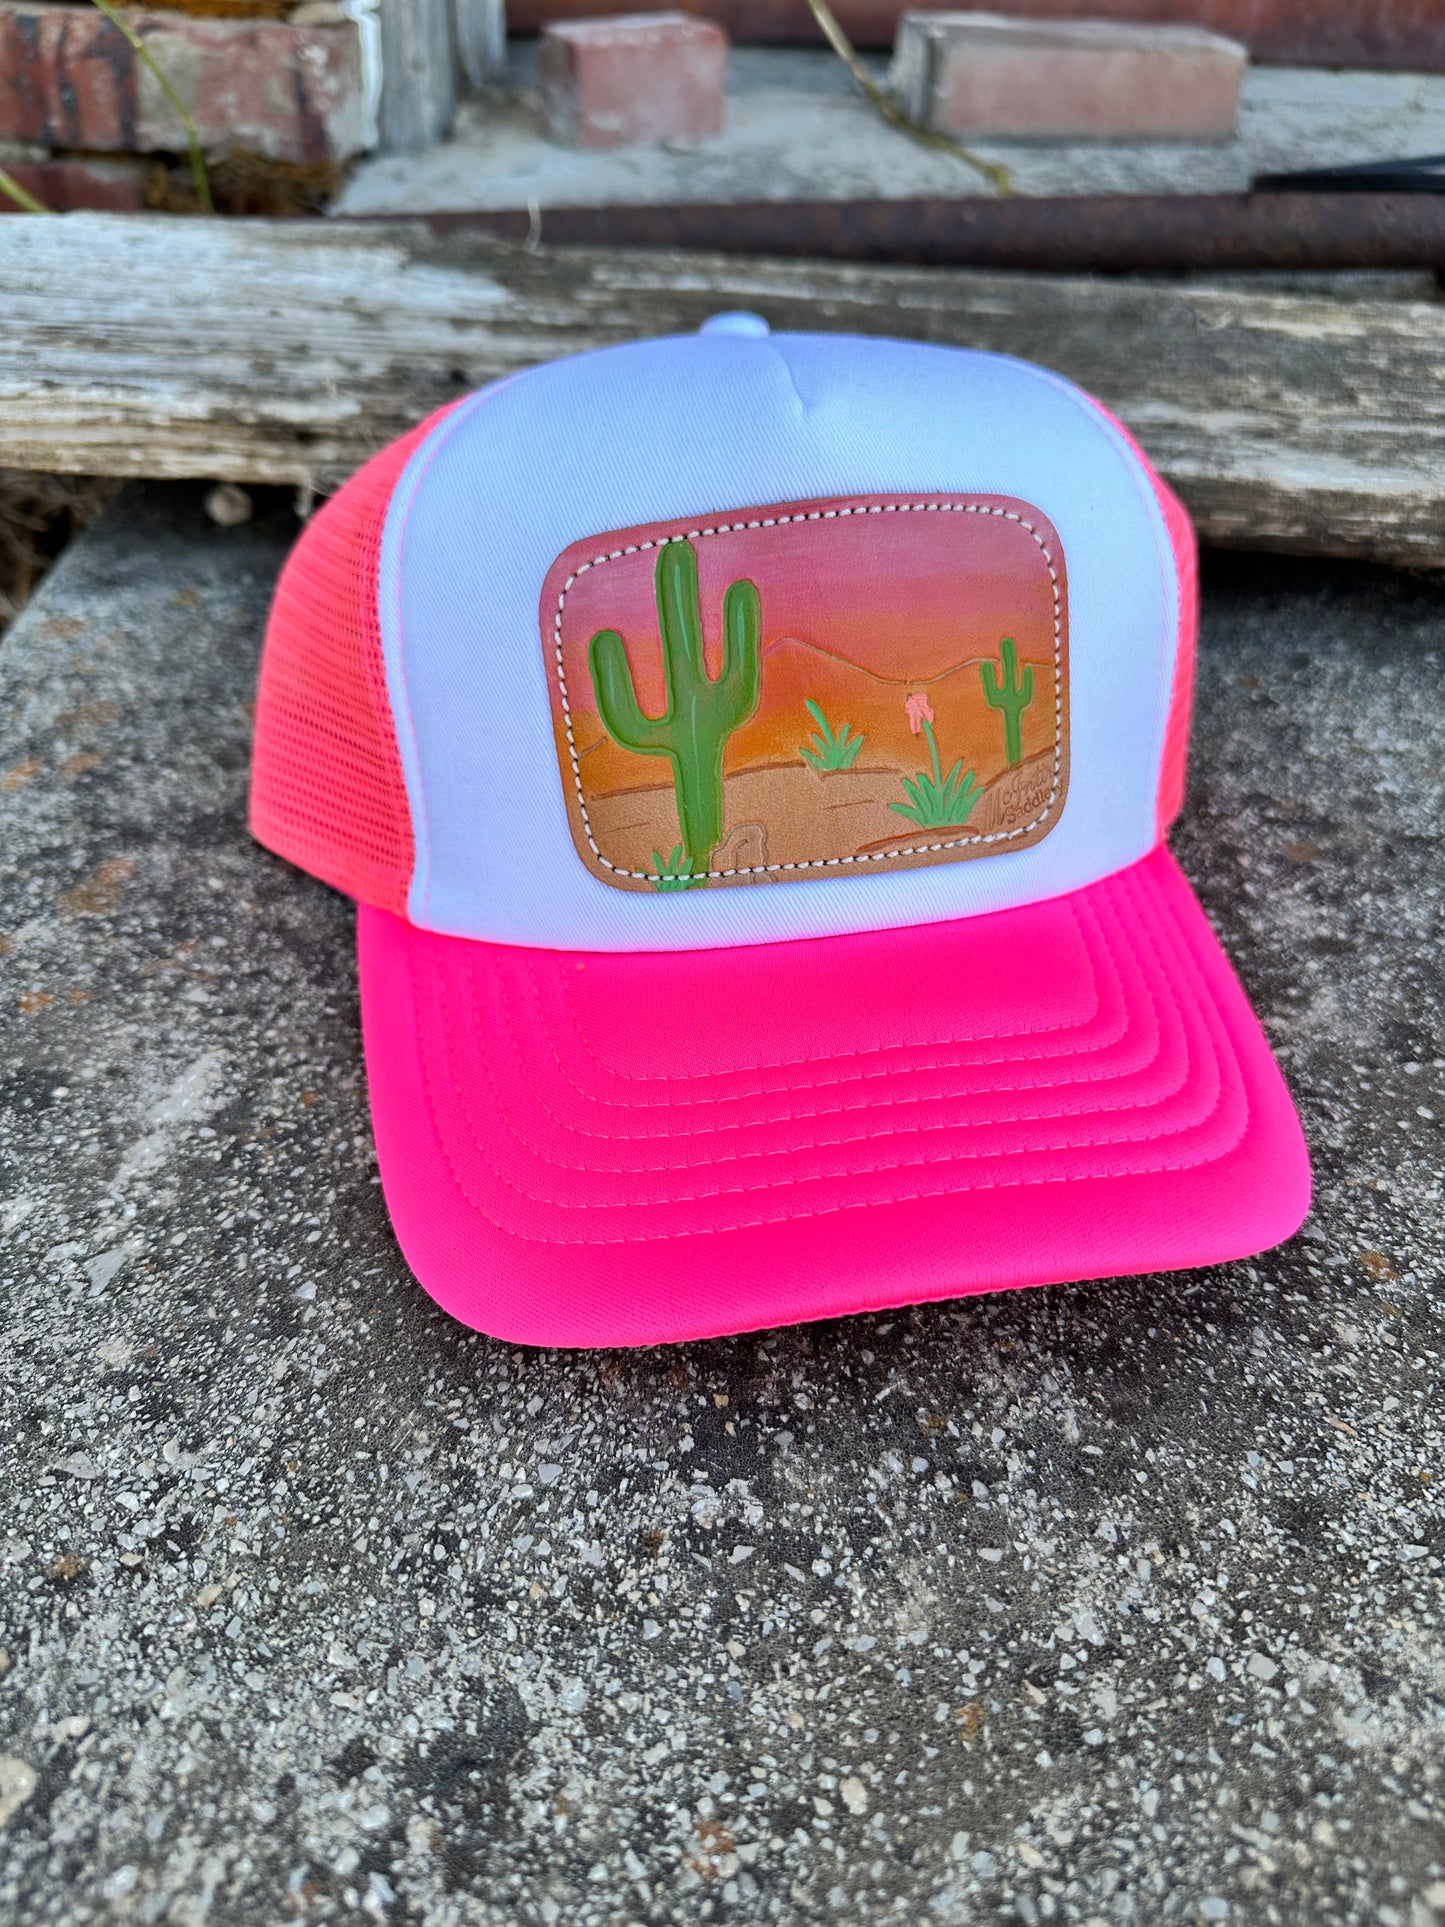 McIntire Hot Pink and White Saguaro Cactus Cap